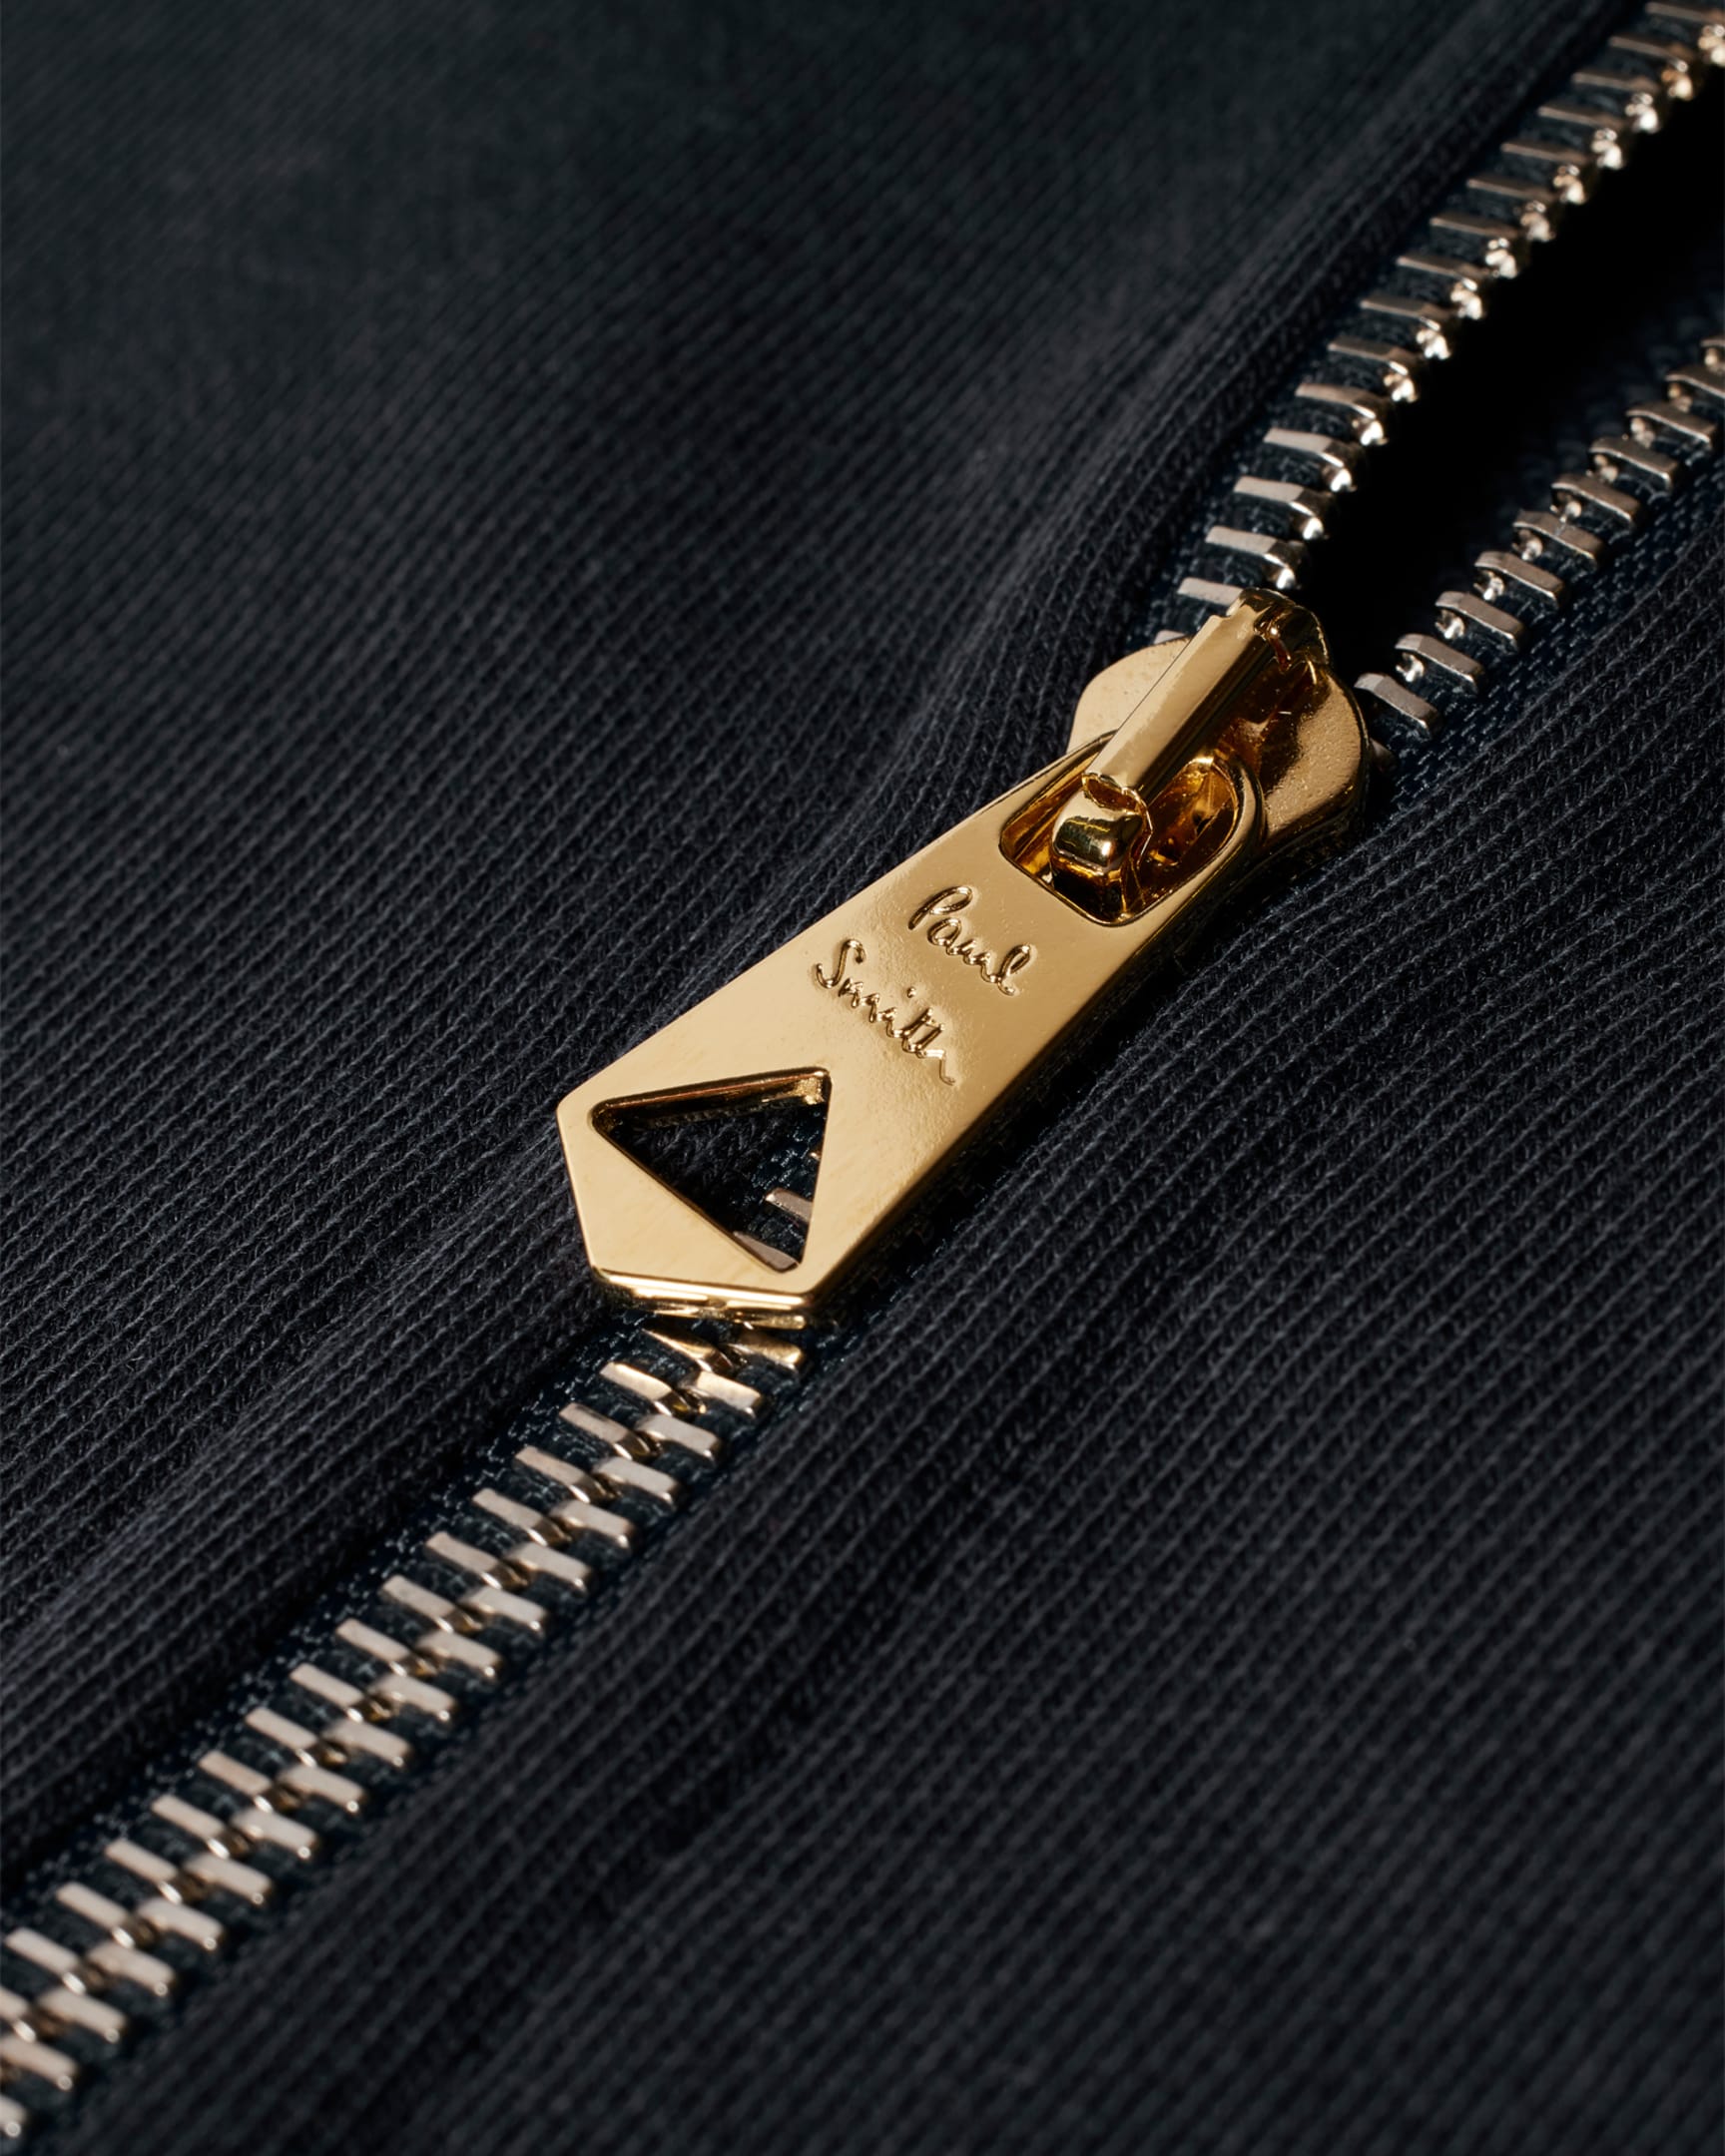 Detail View - Navy Cotton-Blend Zip-Neck Sweatshirt Paul Smith